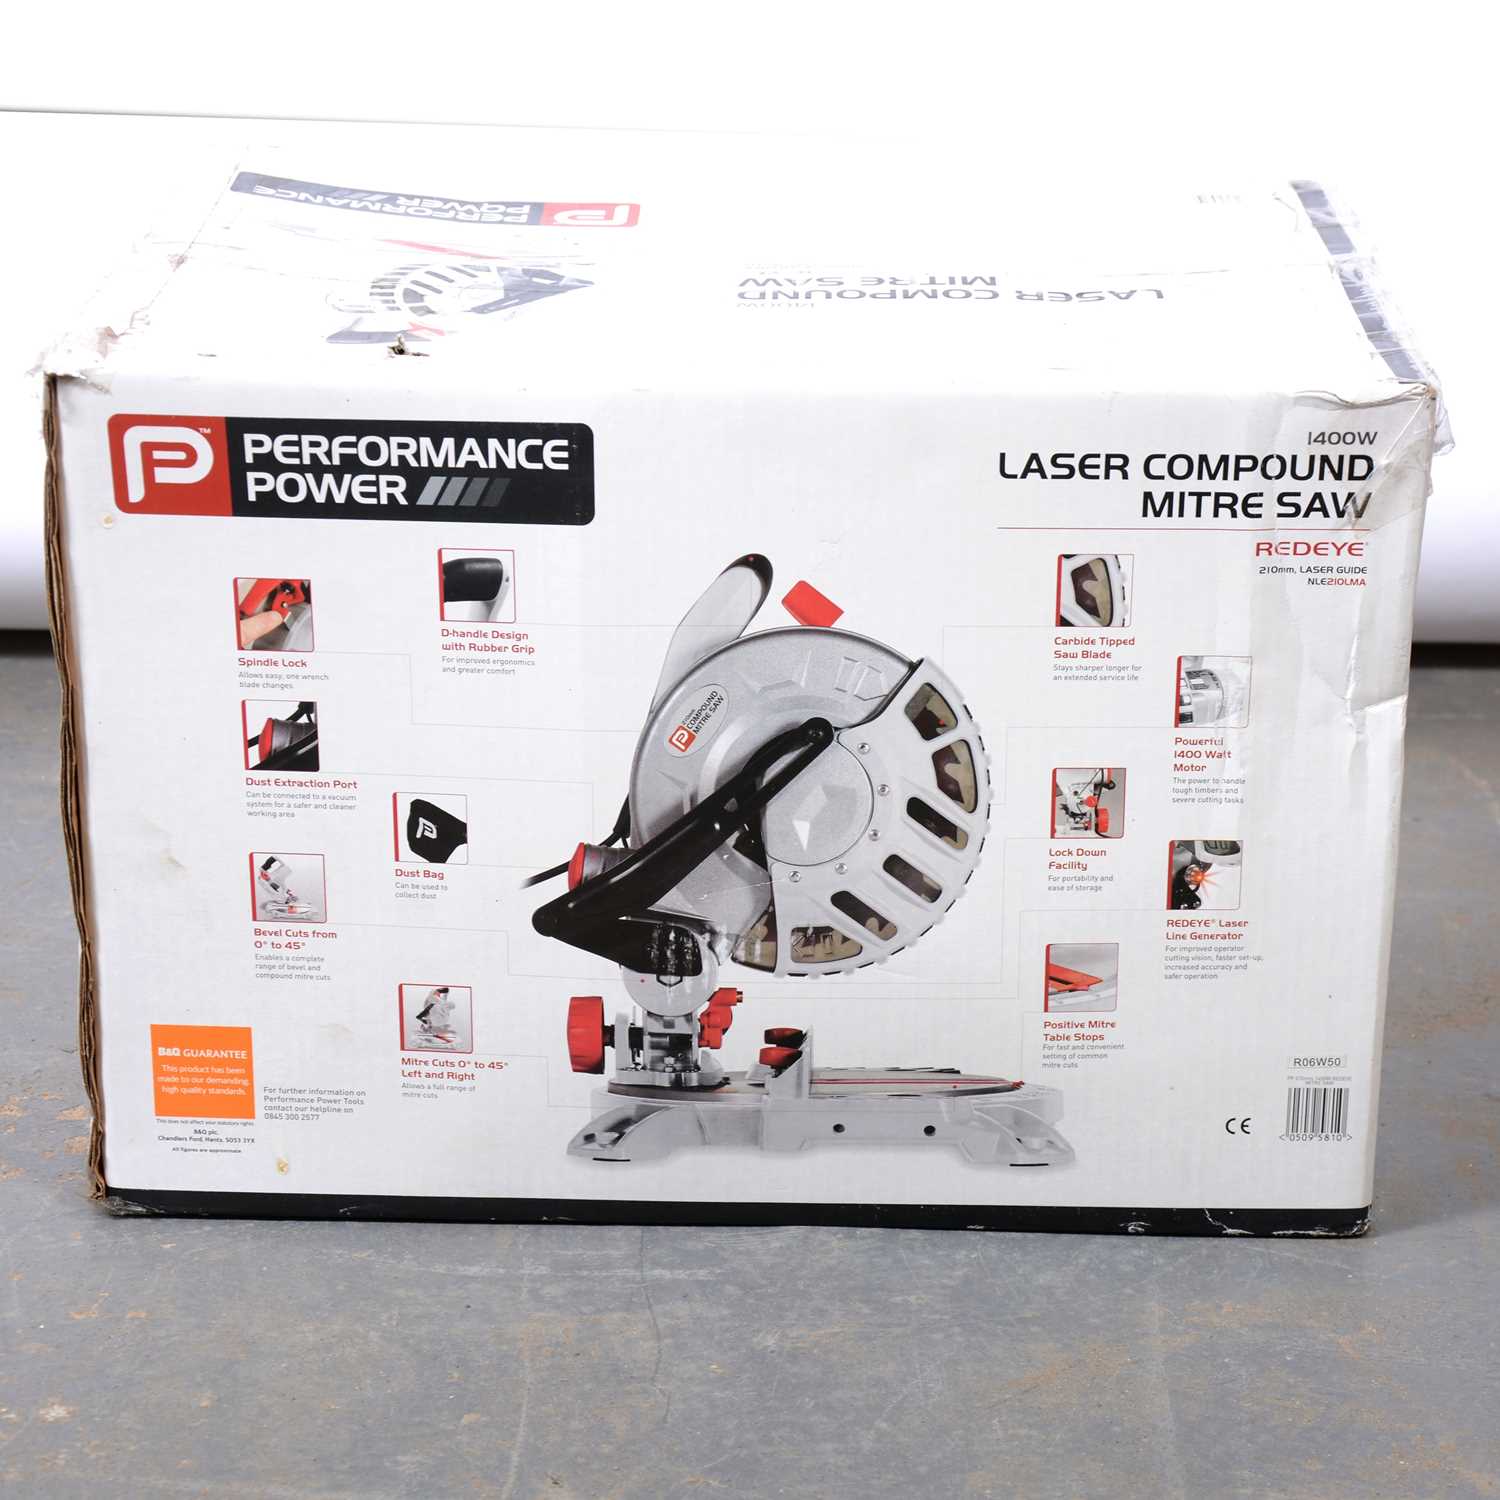 Lot 237 - Performance Power laser compound mitre saw, 1400W.